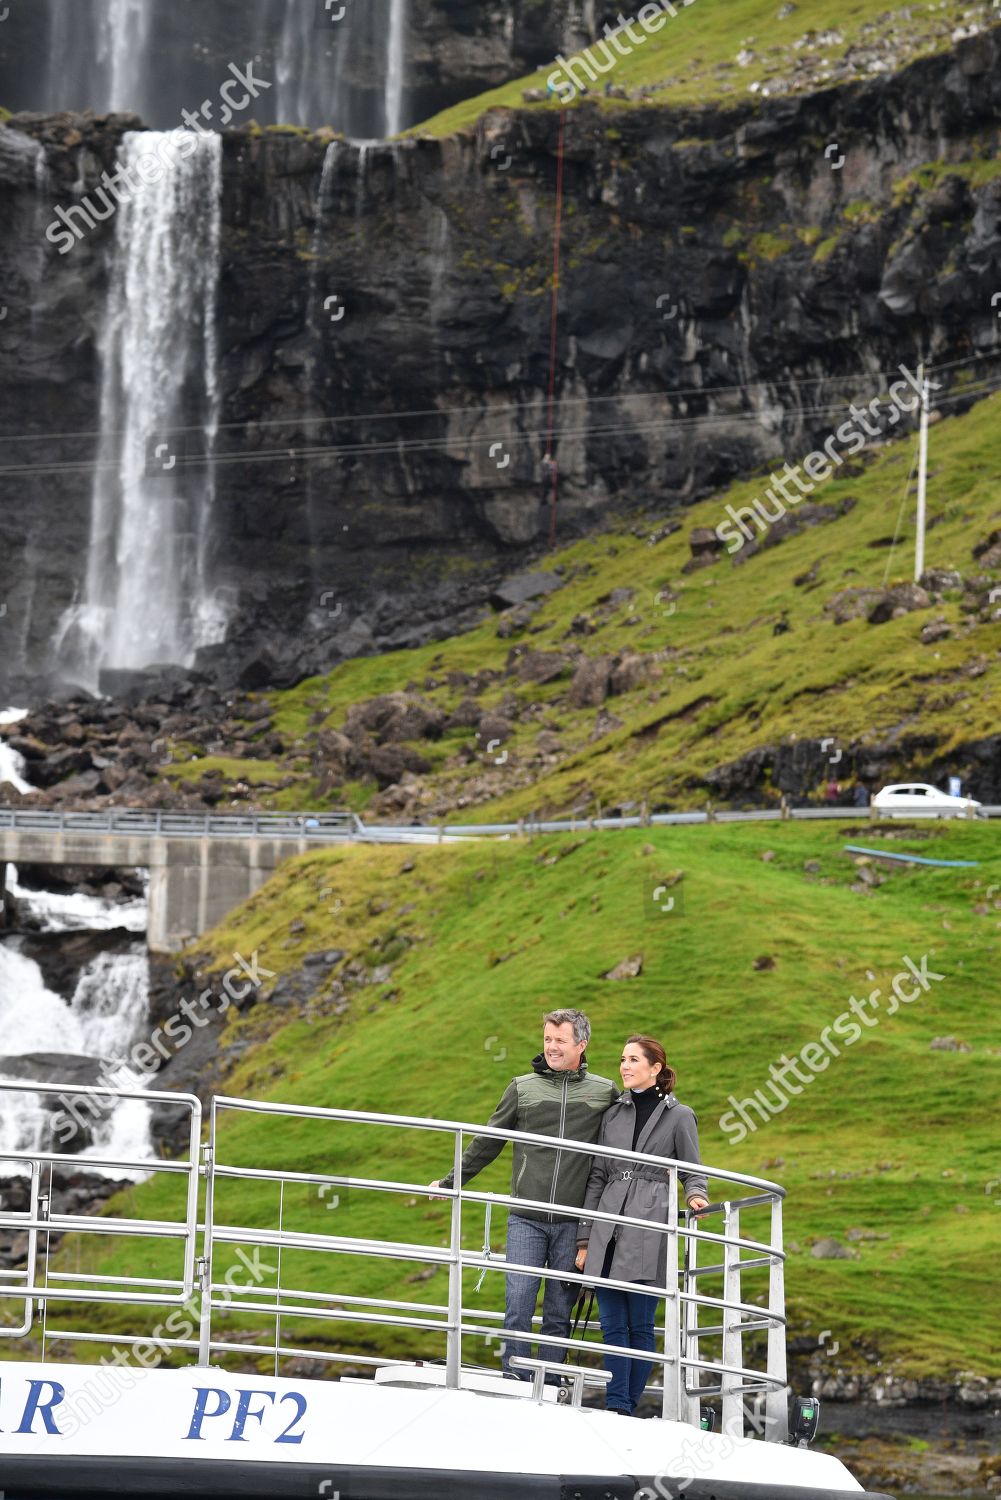 danish-royals-visit-to-the-faroe-islands-denmark-shutterstock-editorial-9807700cn.jpg